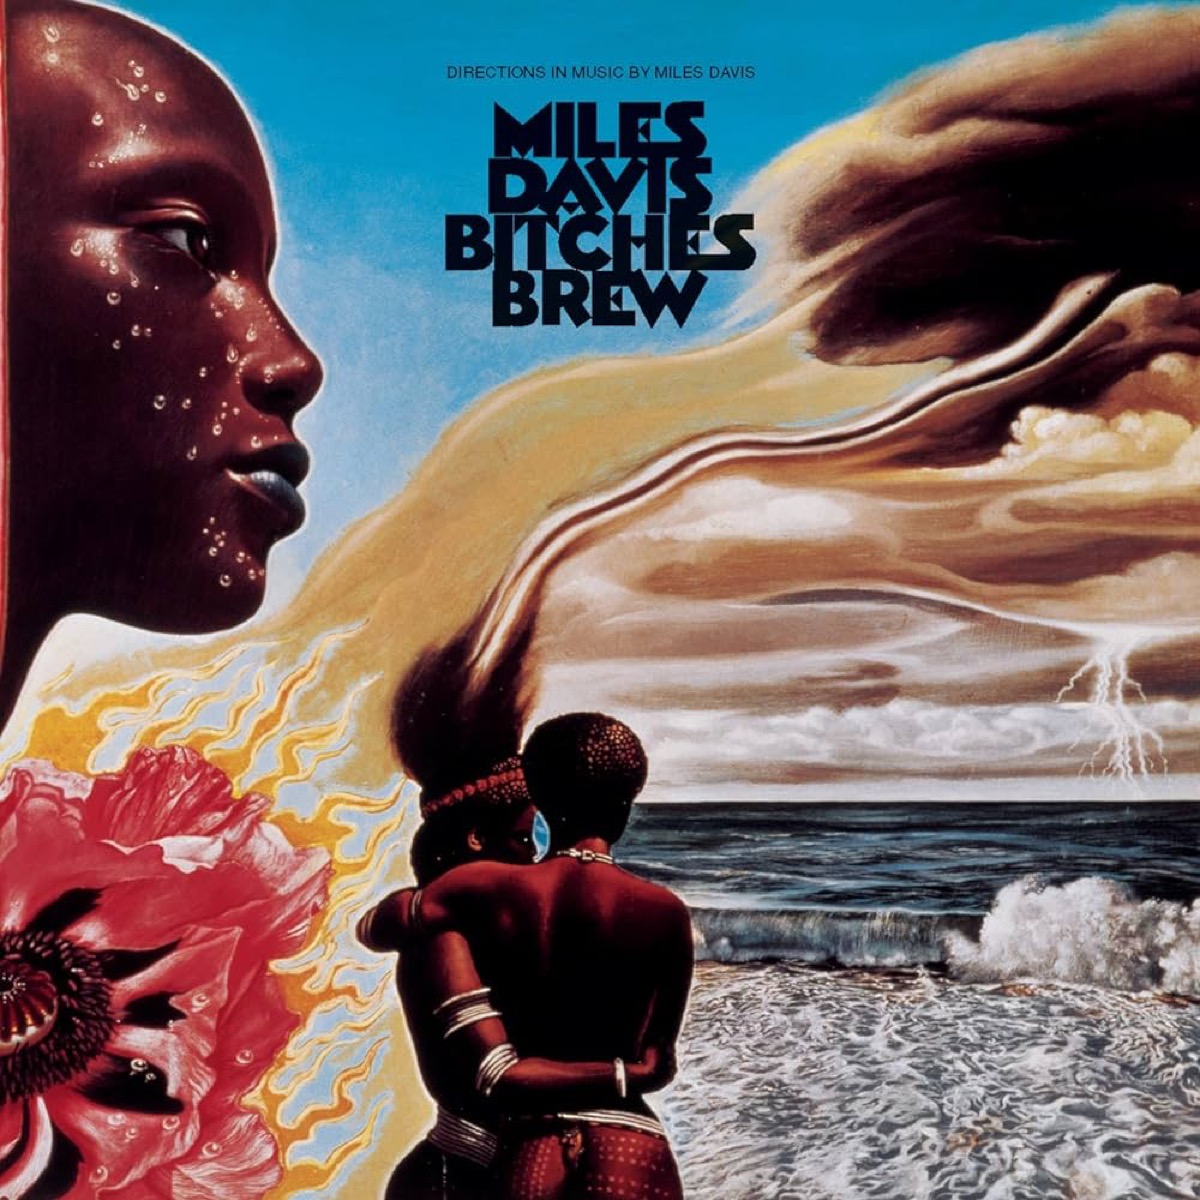 "Bitches Brew" by Miles Davis album cover